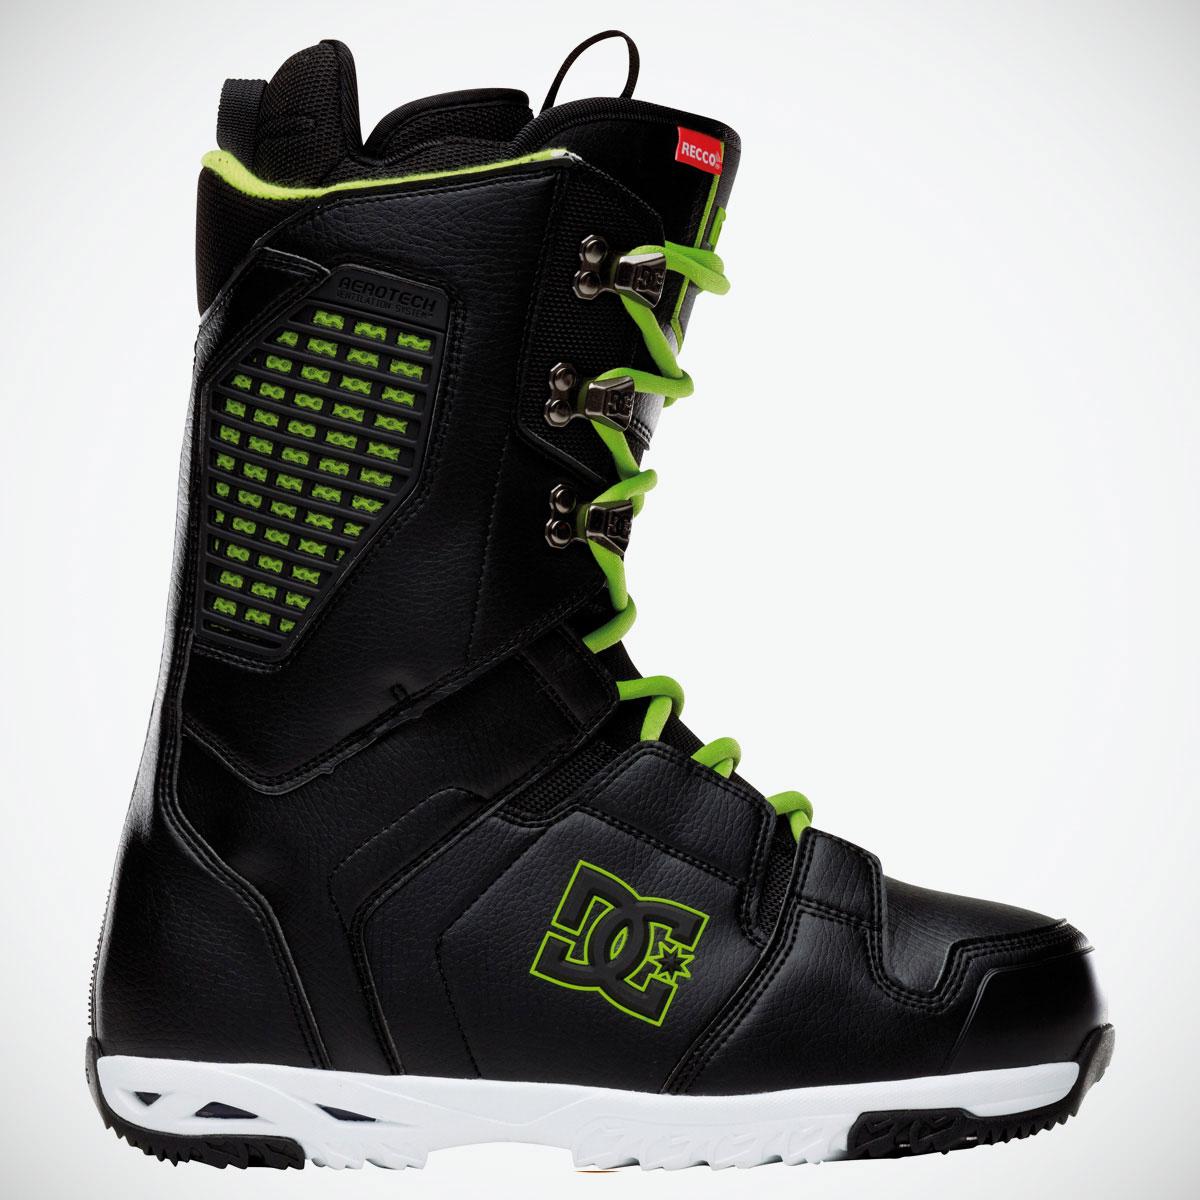 Foto DC Ceptor 2012 Snowboard Boots Black/green